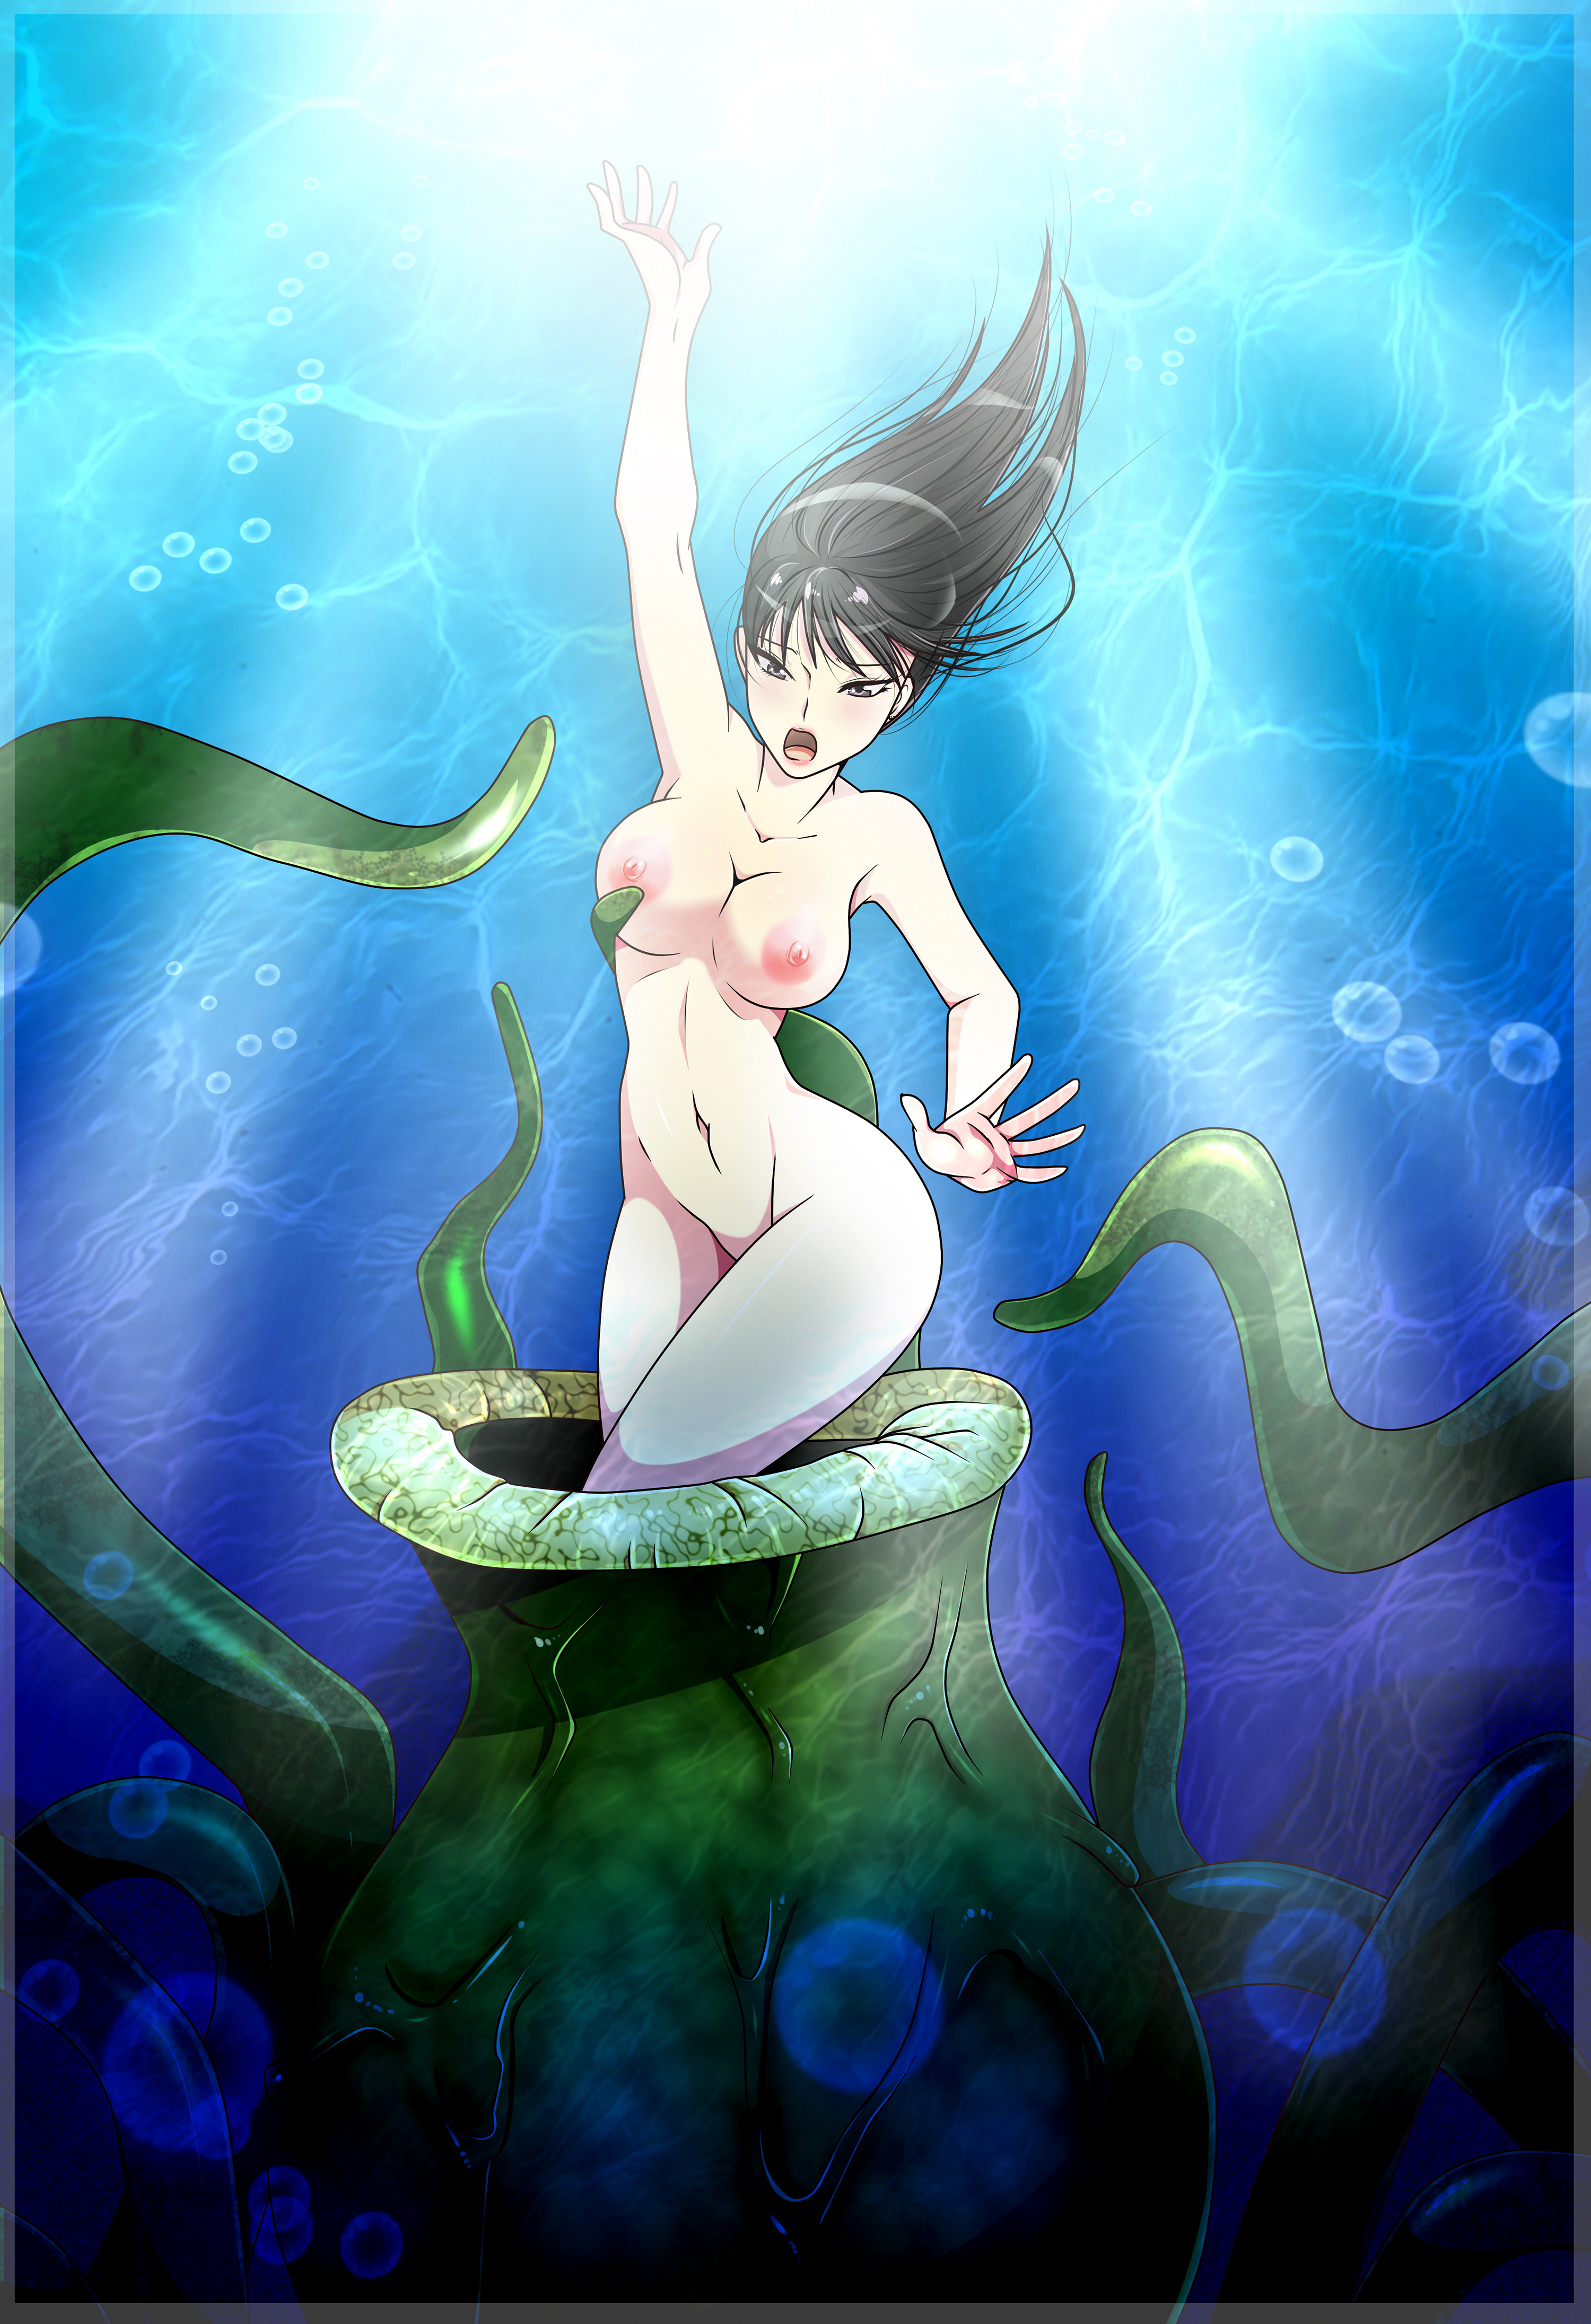 Naked Japanese cutie Chiba Moe is eaten alive by an underwater tentacle monster.